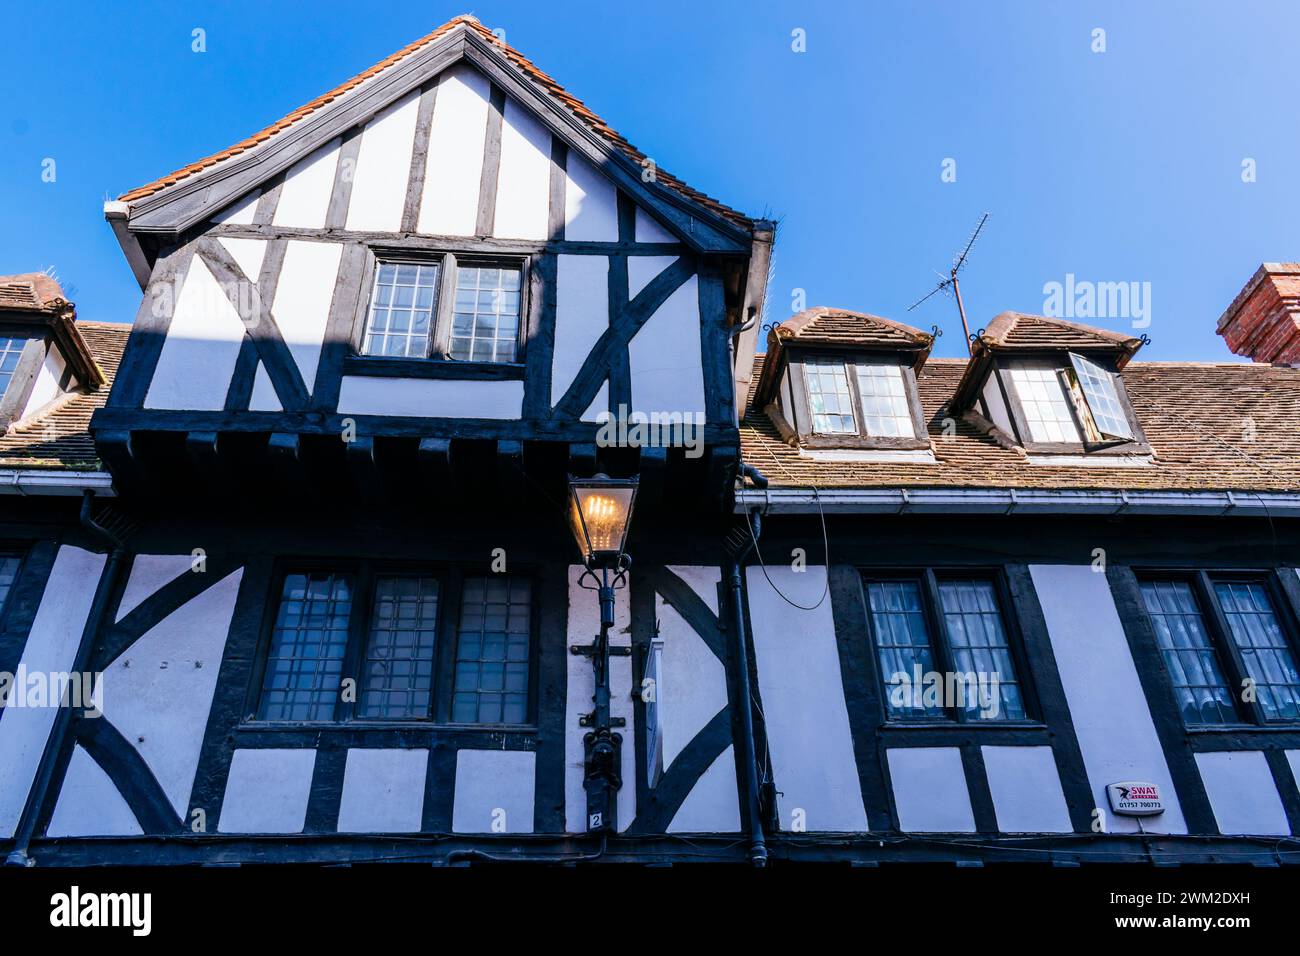 Bâtiment d'architecture Tudor. High Petergate Street. York, Yorkshire du Nord, Yorkshire et Humber, Angleterre, Royaume-Uni, Europe Banque D'Images